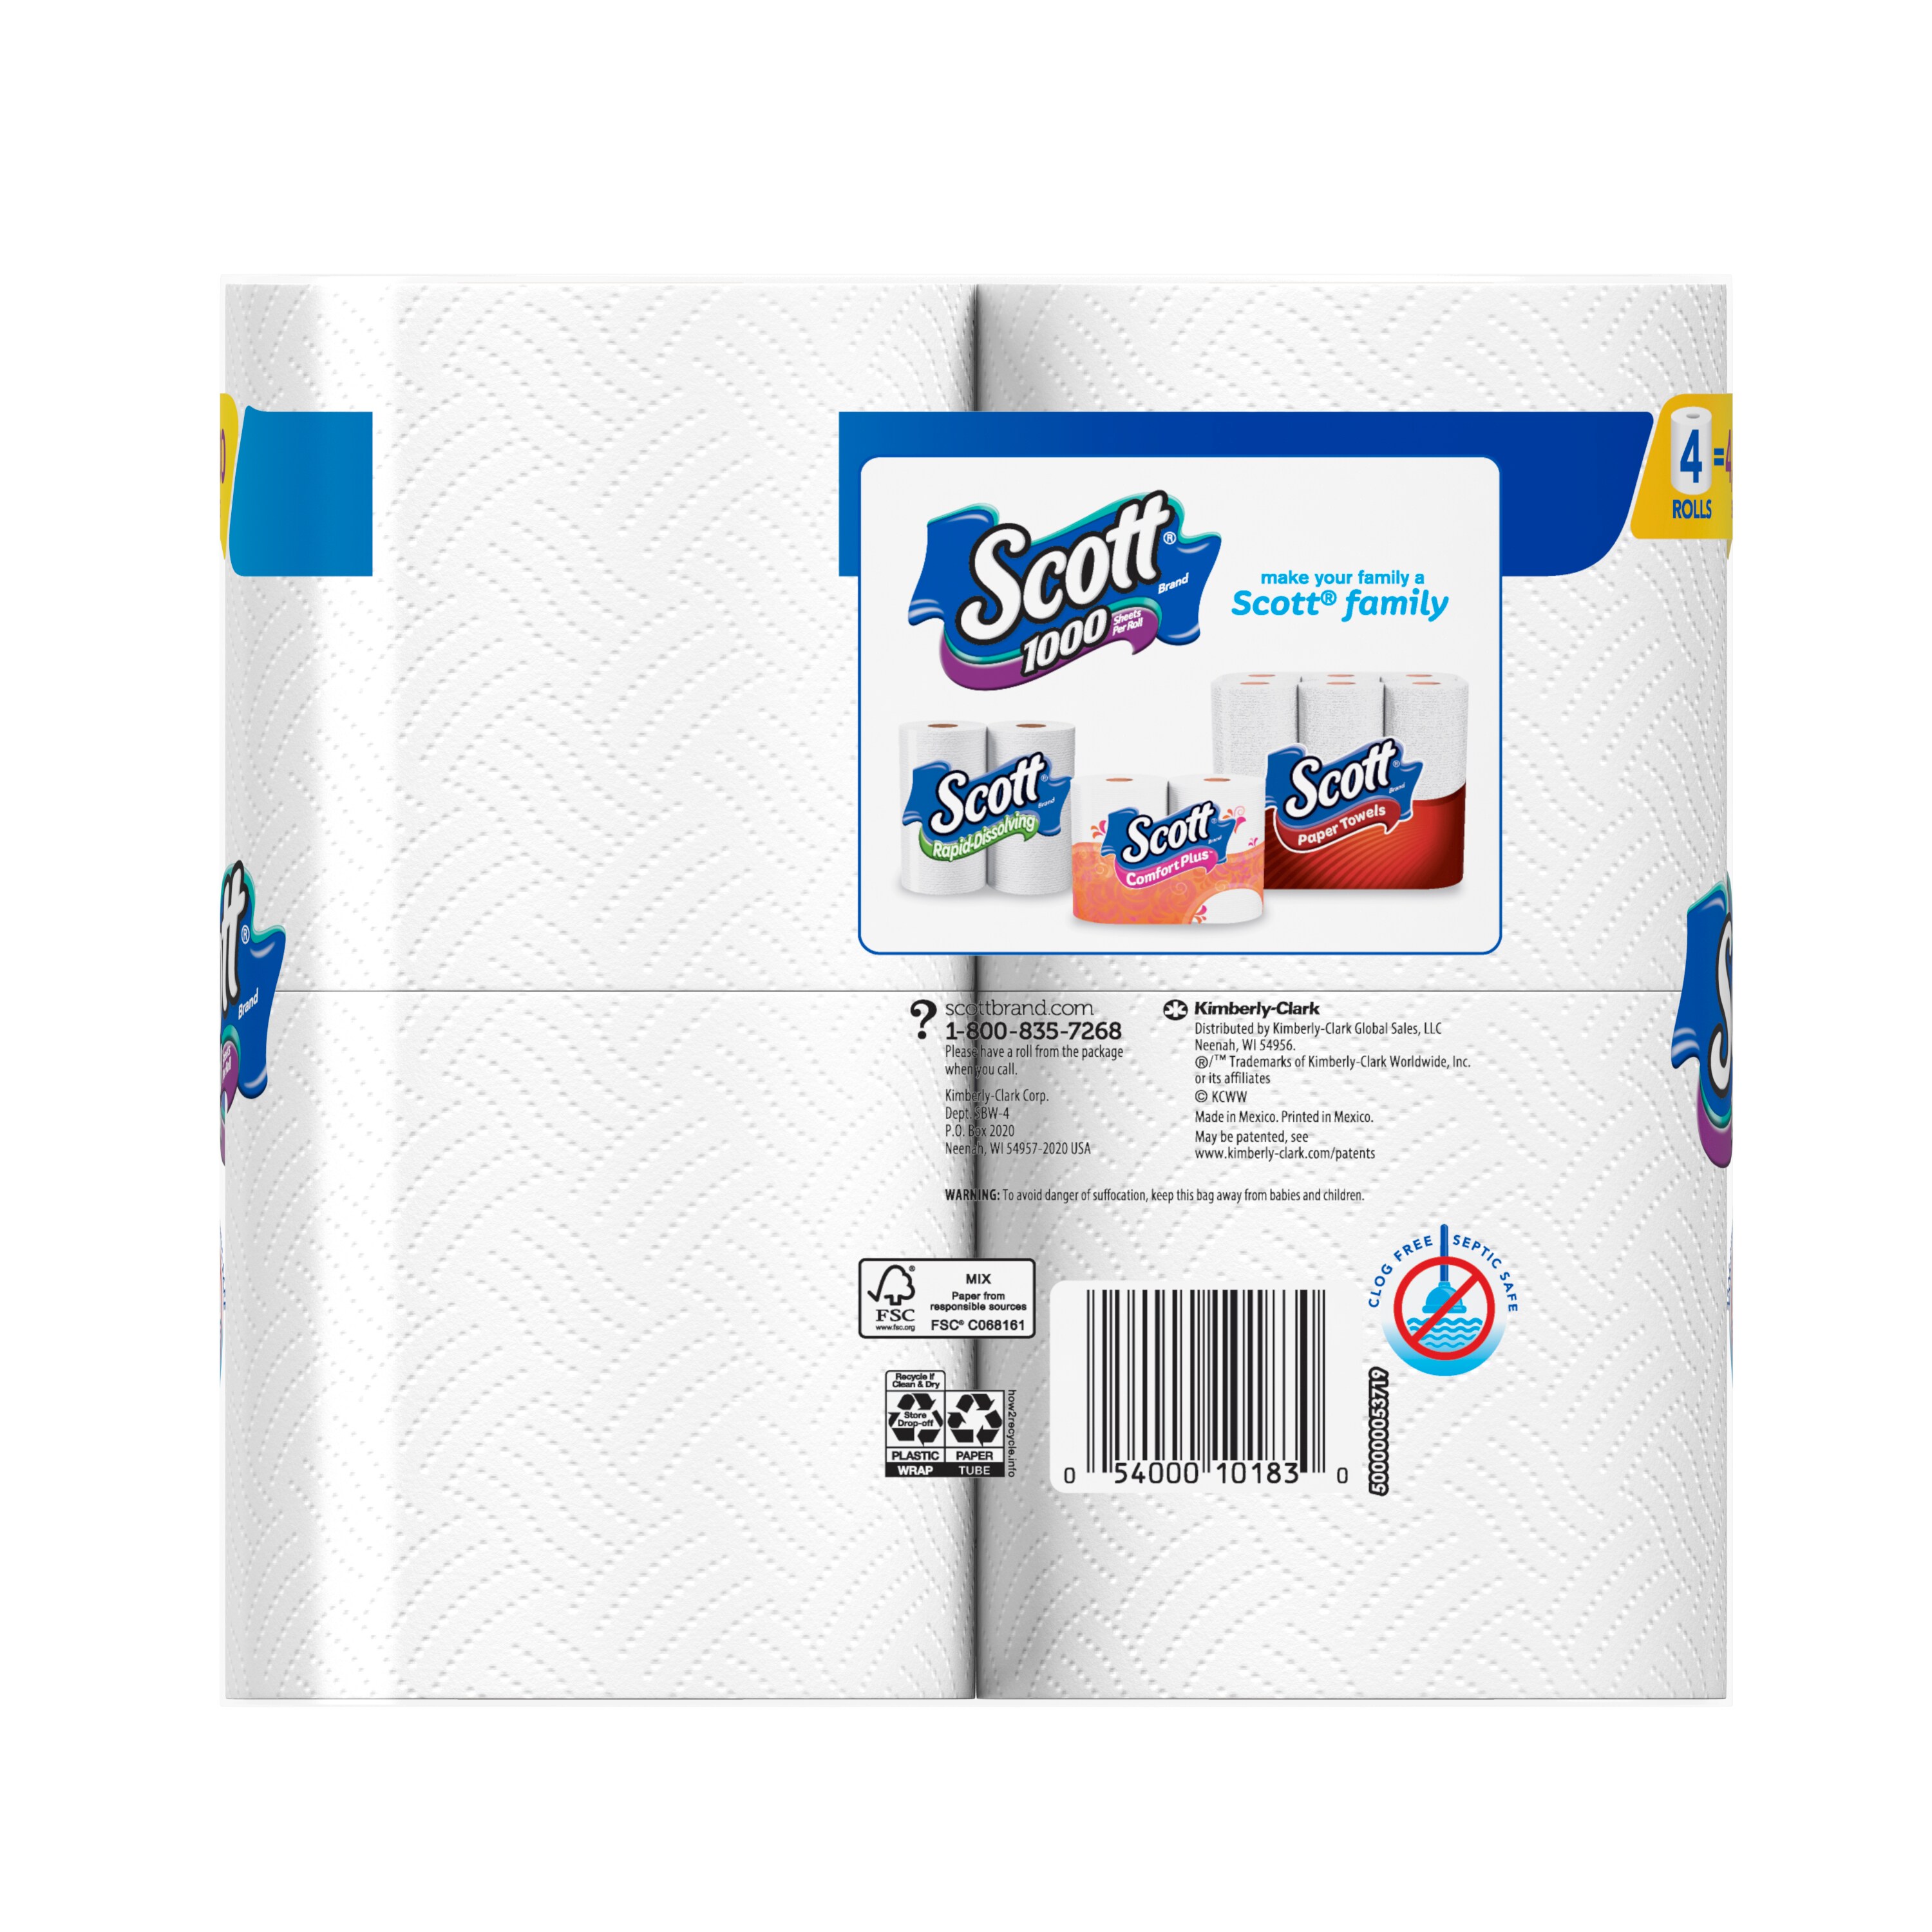 Scott 1000 Toilet Paper, 24 Rolls, 1,000 Sheets per Roll 